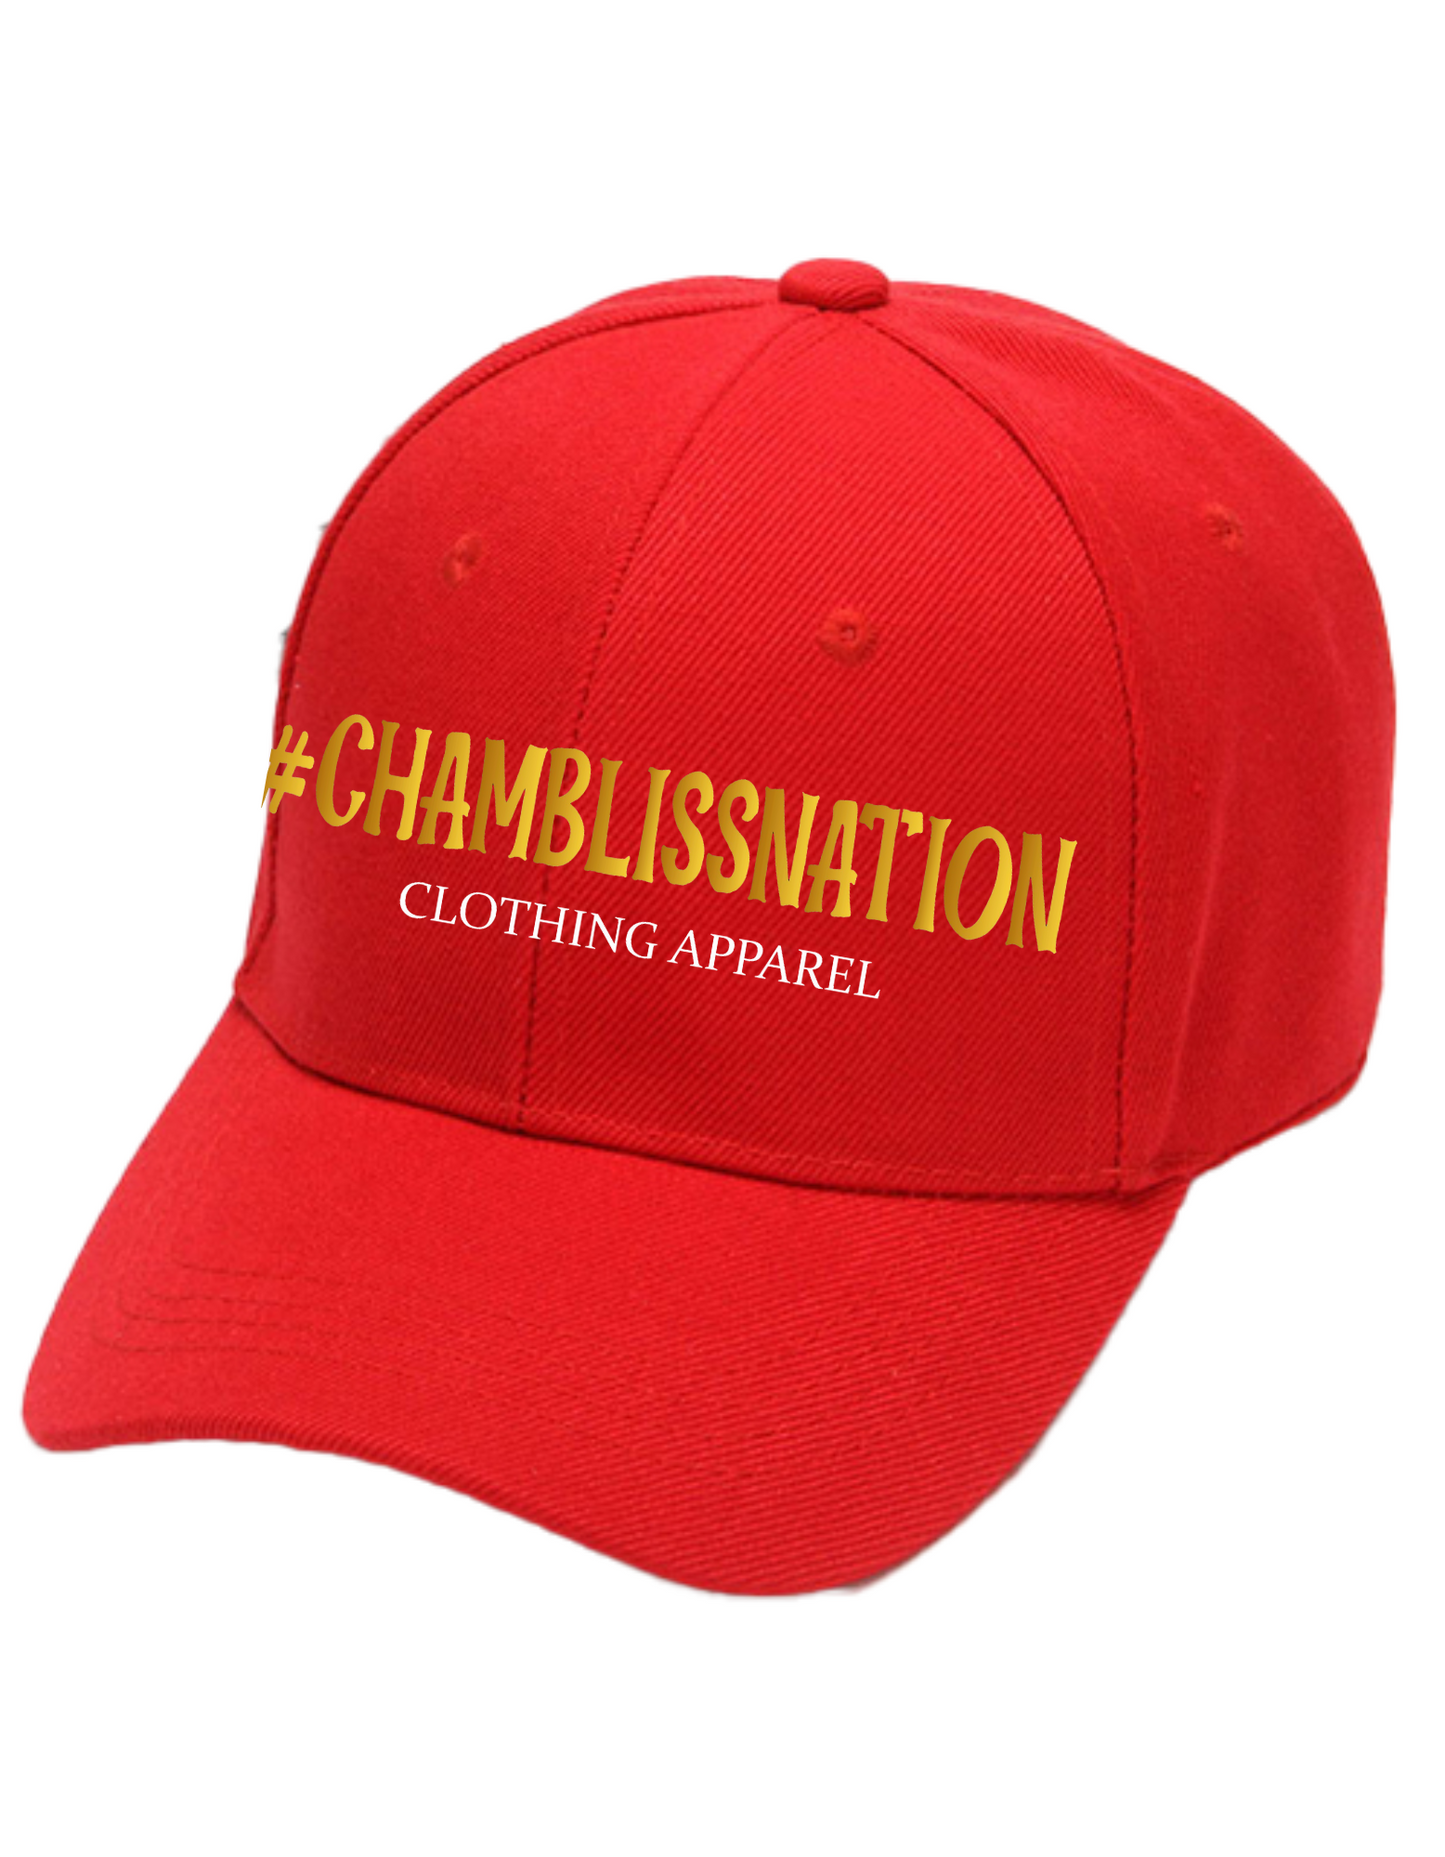 #Chamblisnation Clothing Apparel